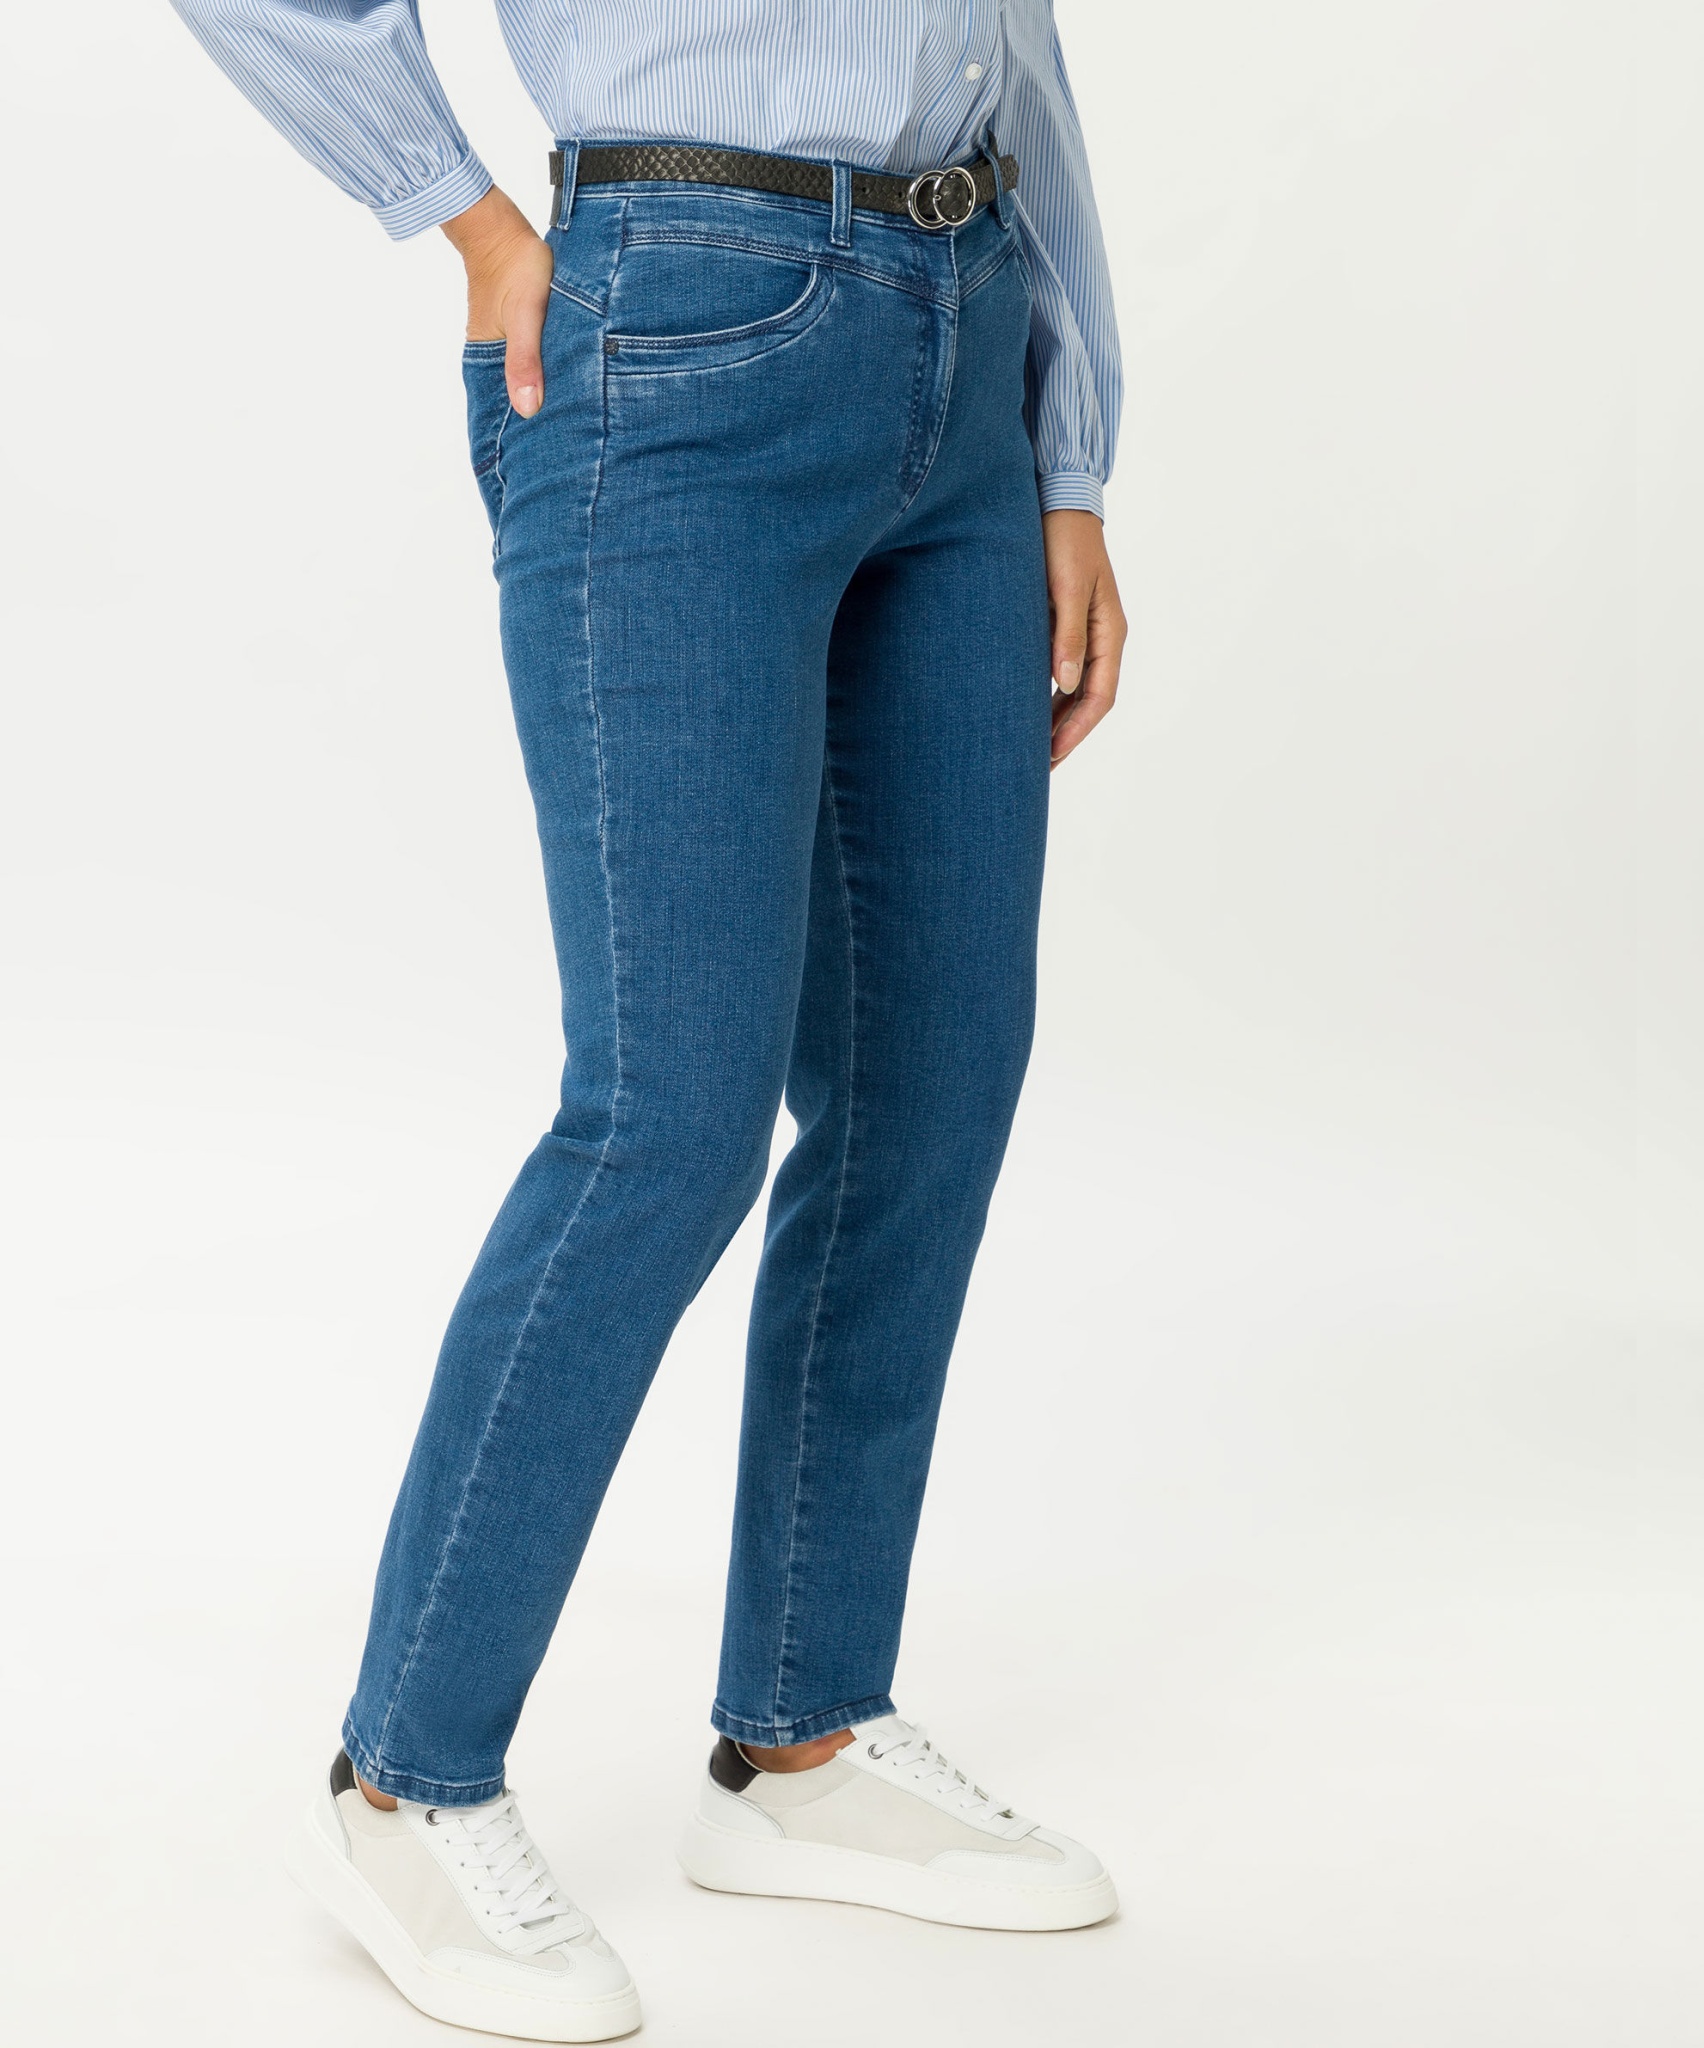 RAPHAELA BY BRAX Jeans Caren kaufen New 10715424 | WÖHRL